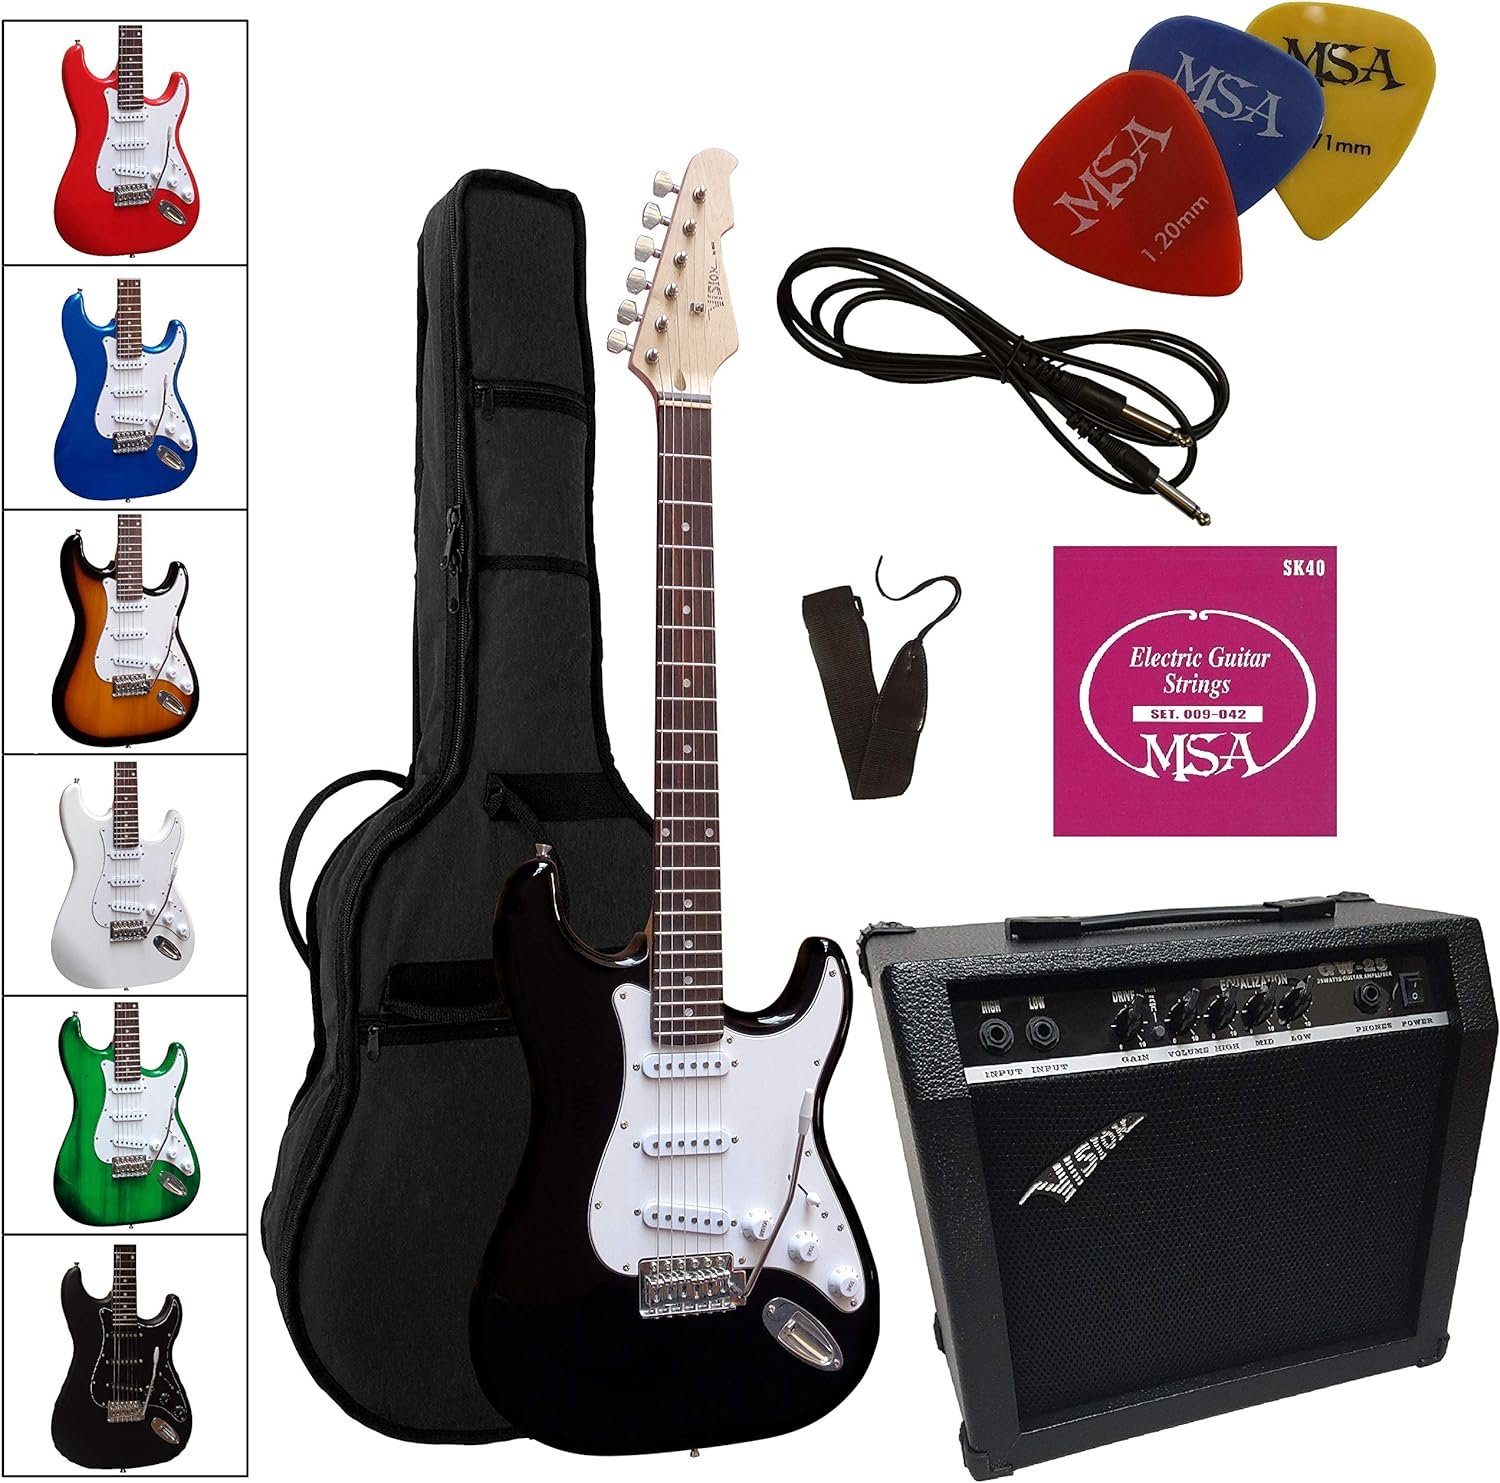 MSA E-Gitarre Vielseitiges Klangspektrum, Ausdrucksstarke Klänge Komfortables Spielgefühl Kompakt Leistungsstark